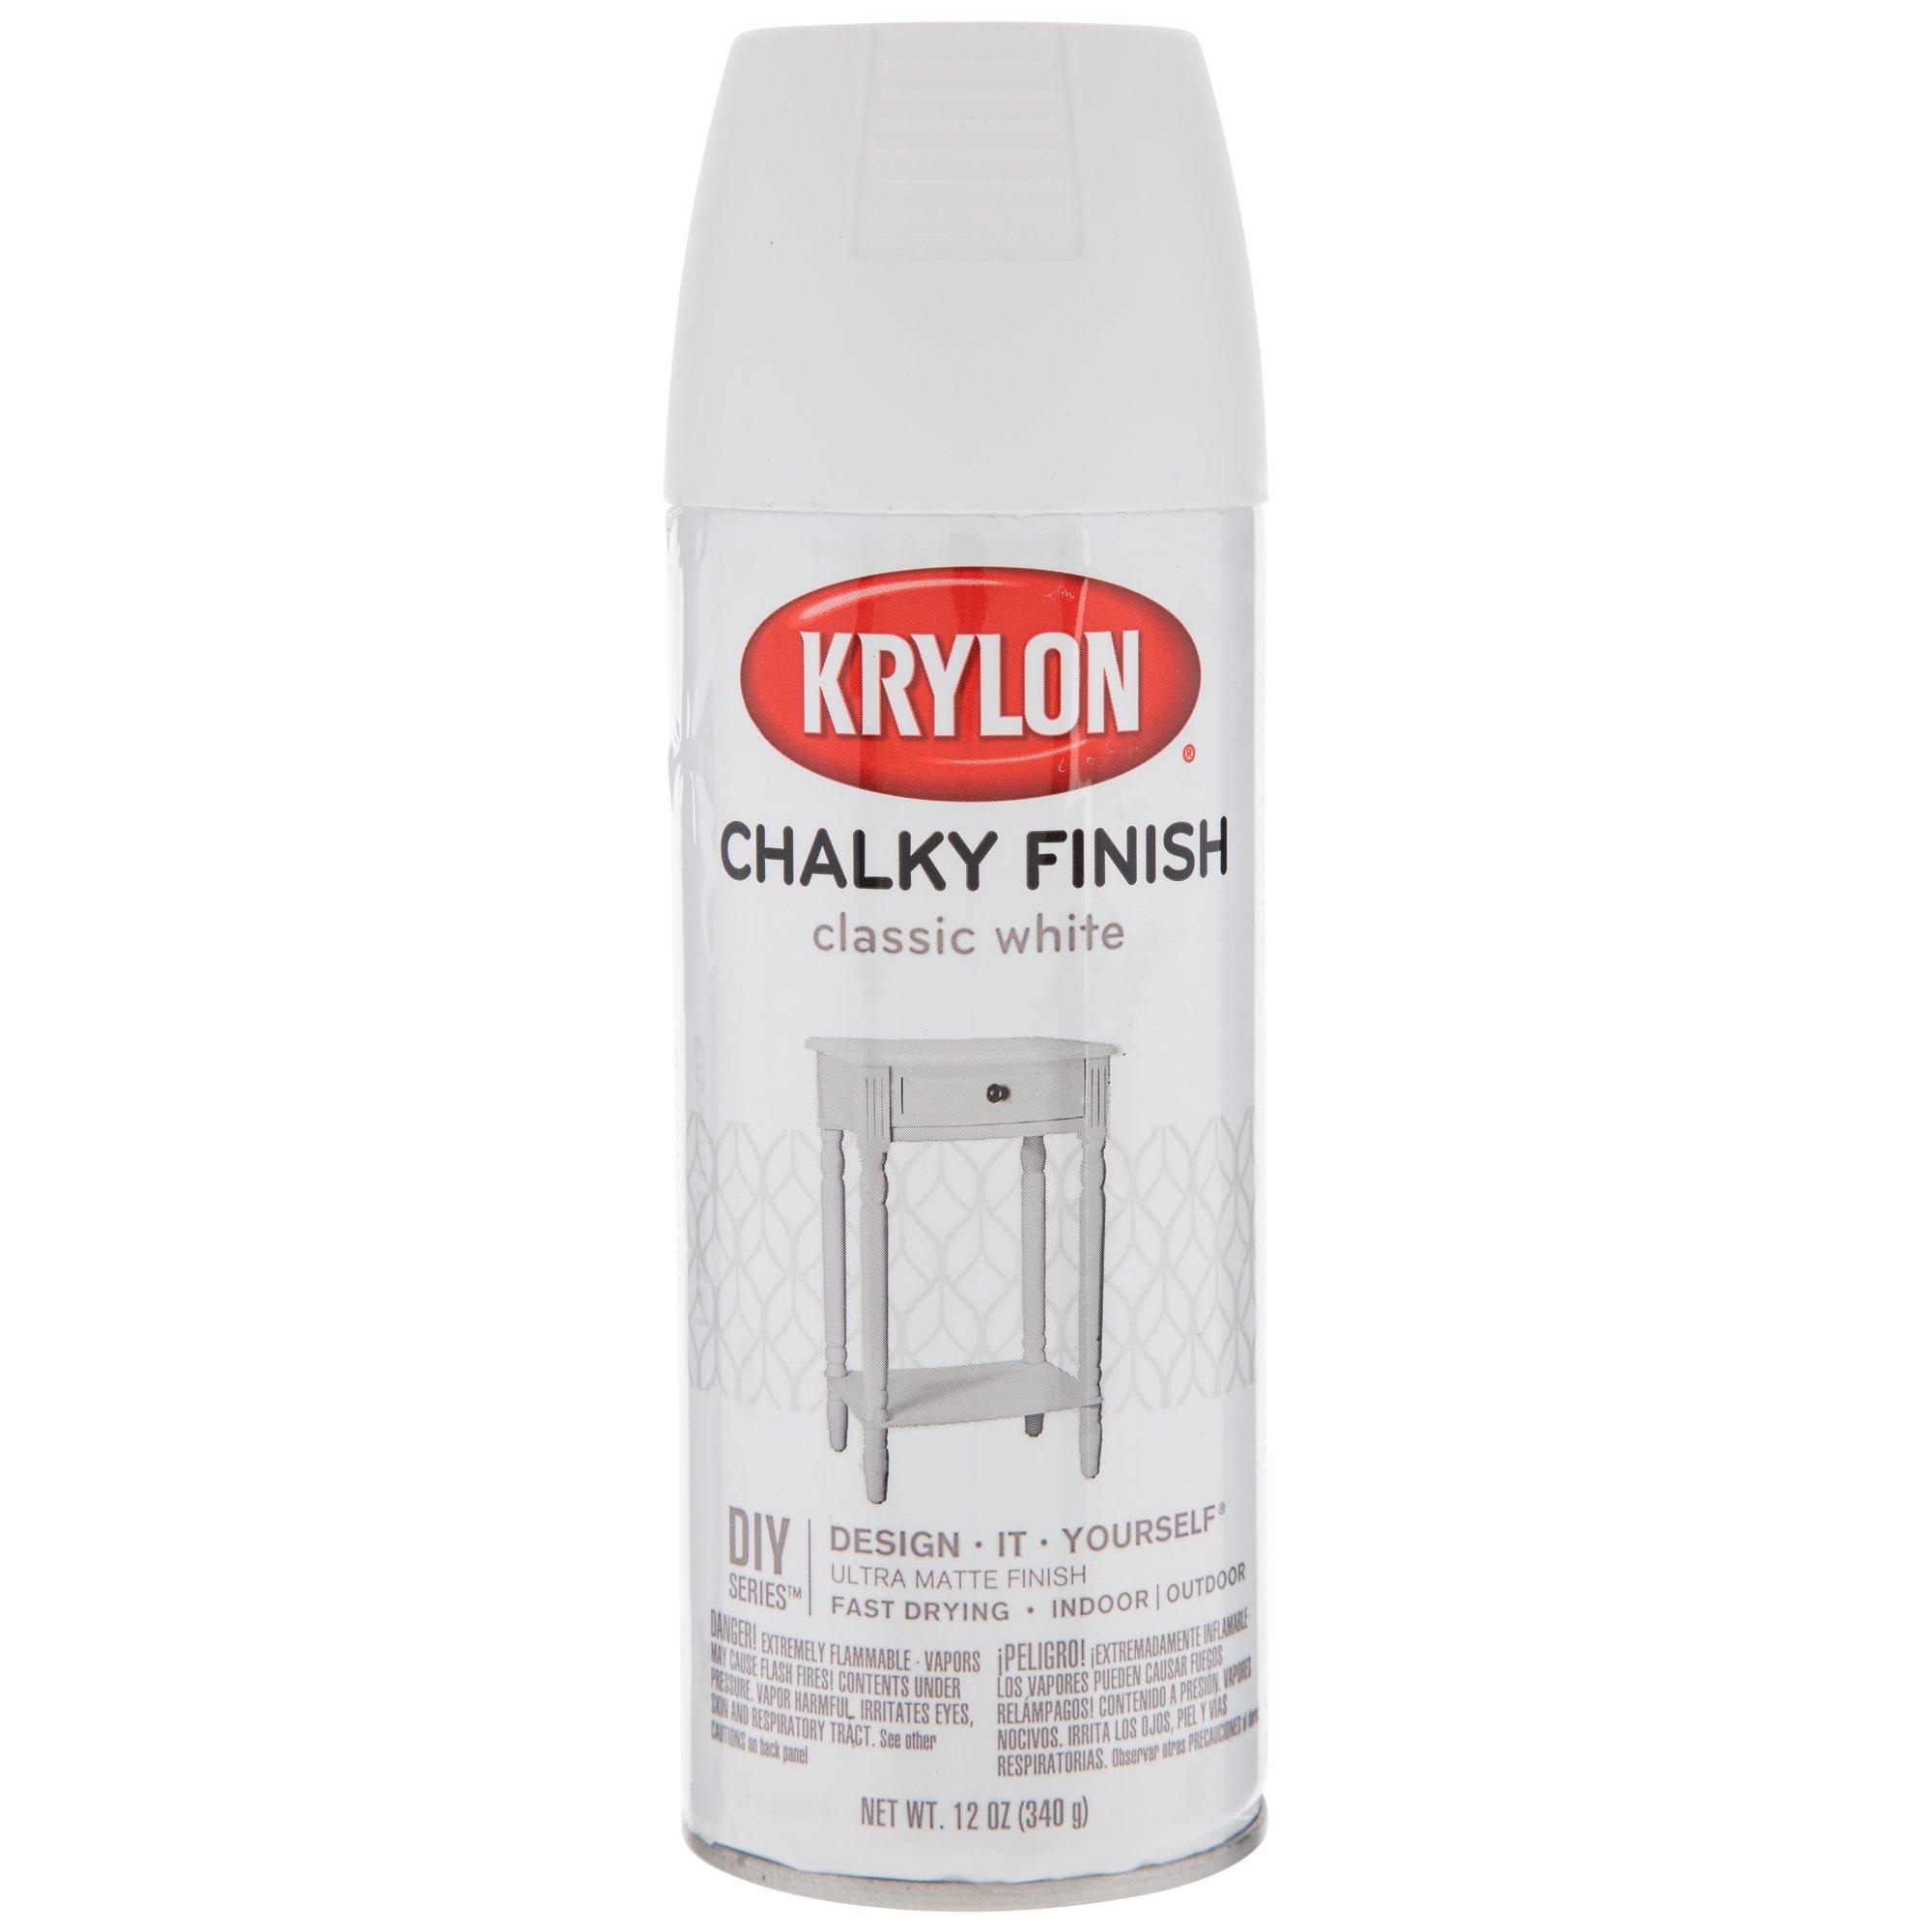 Krylon Neon Spray Paint, Hobby Lobby, 2124279